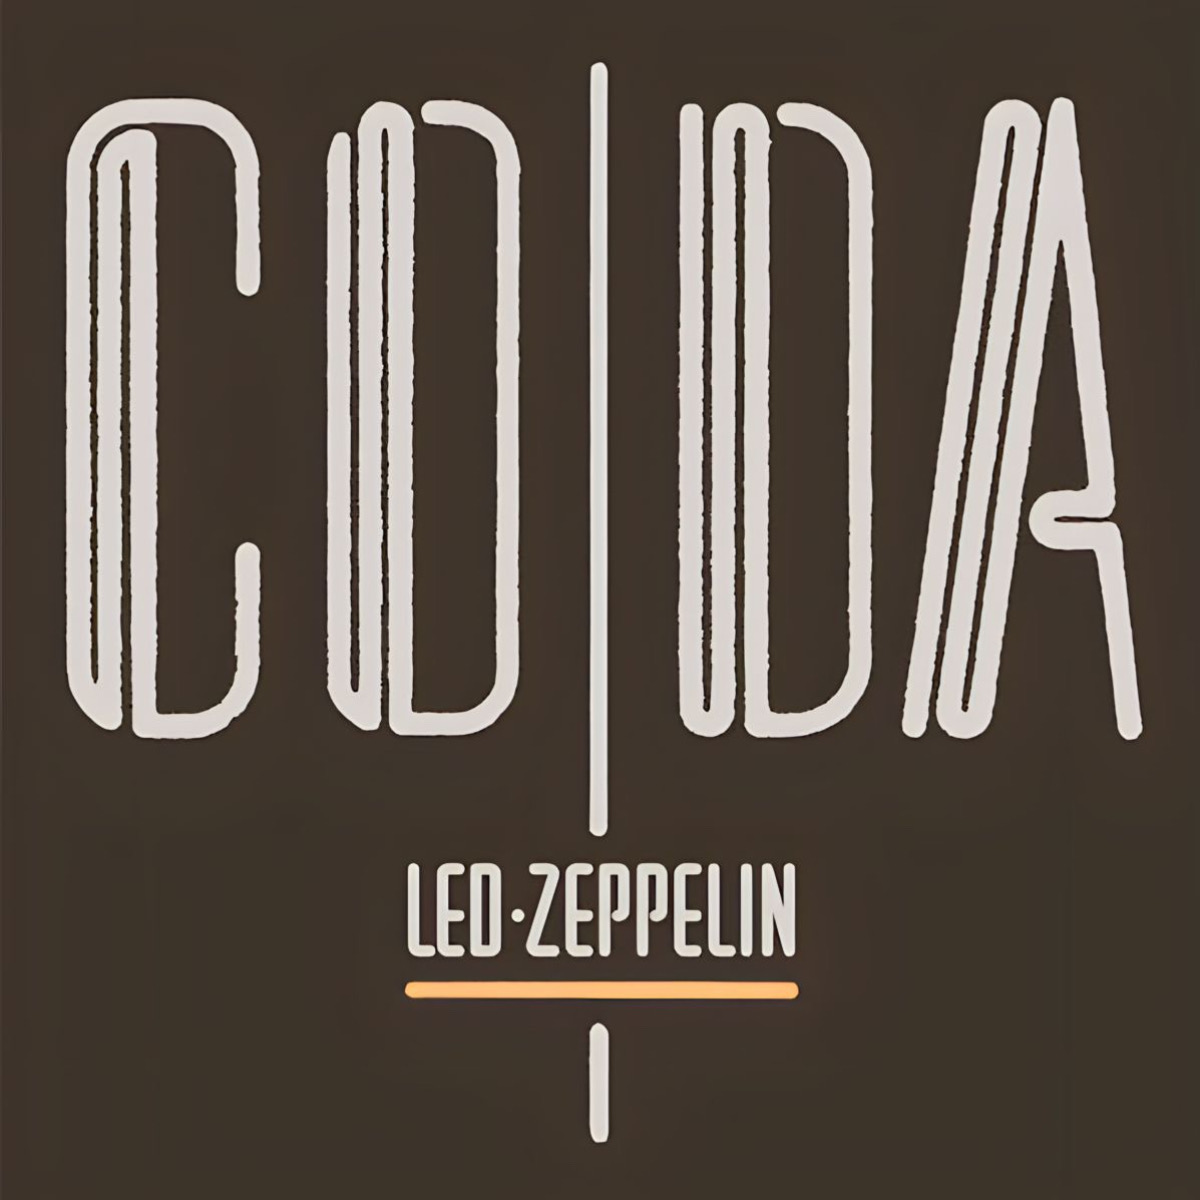 Led Zeppelins "Coda"-Album